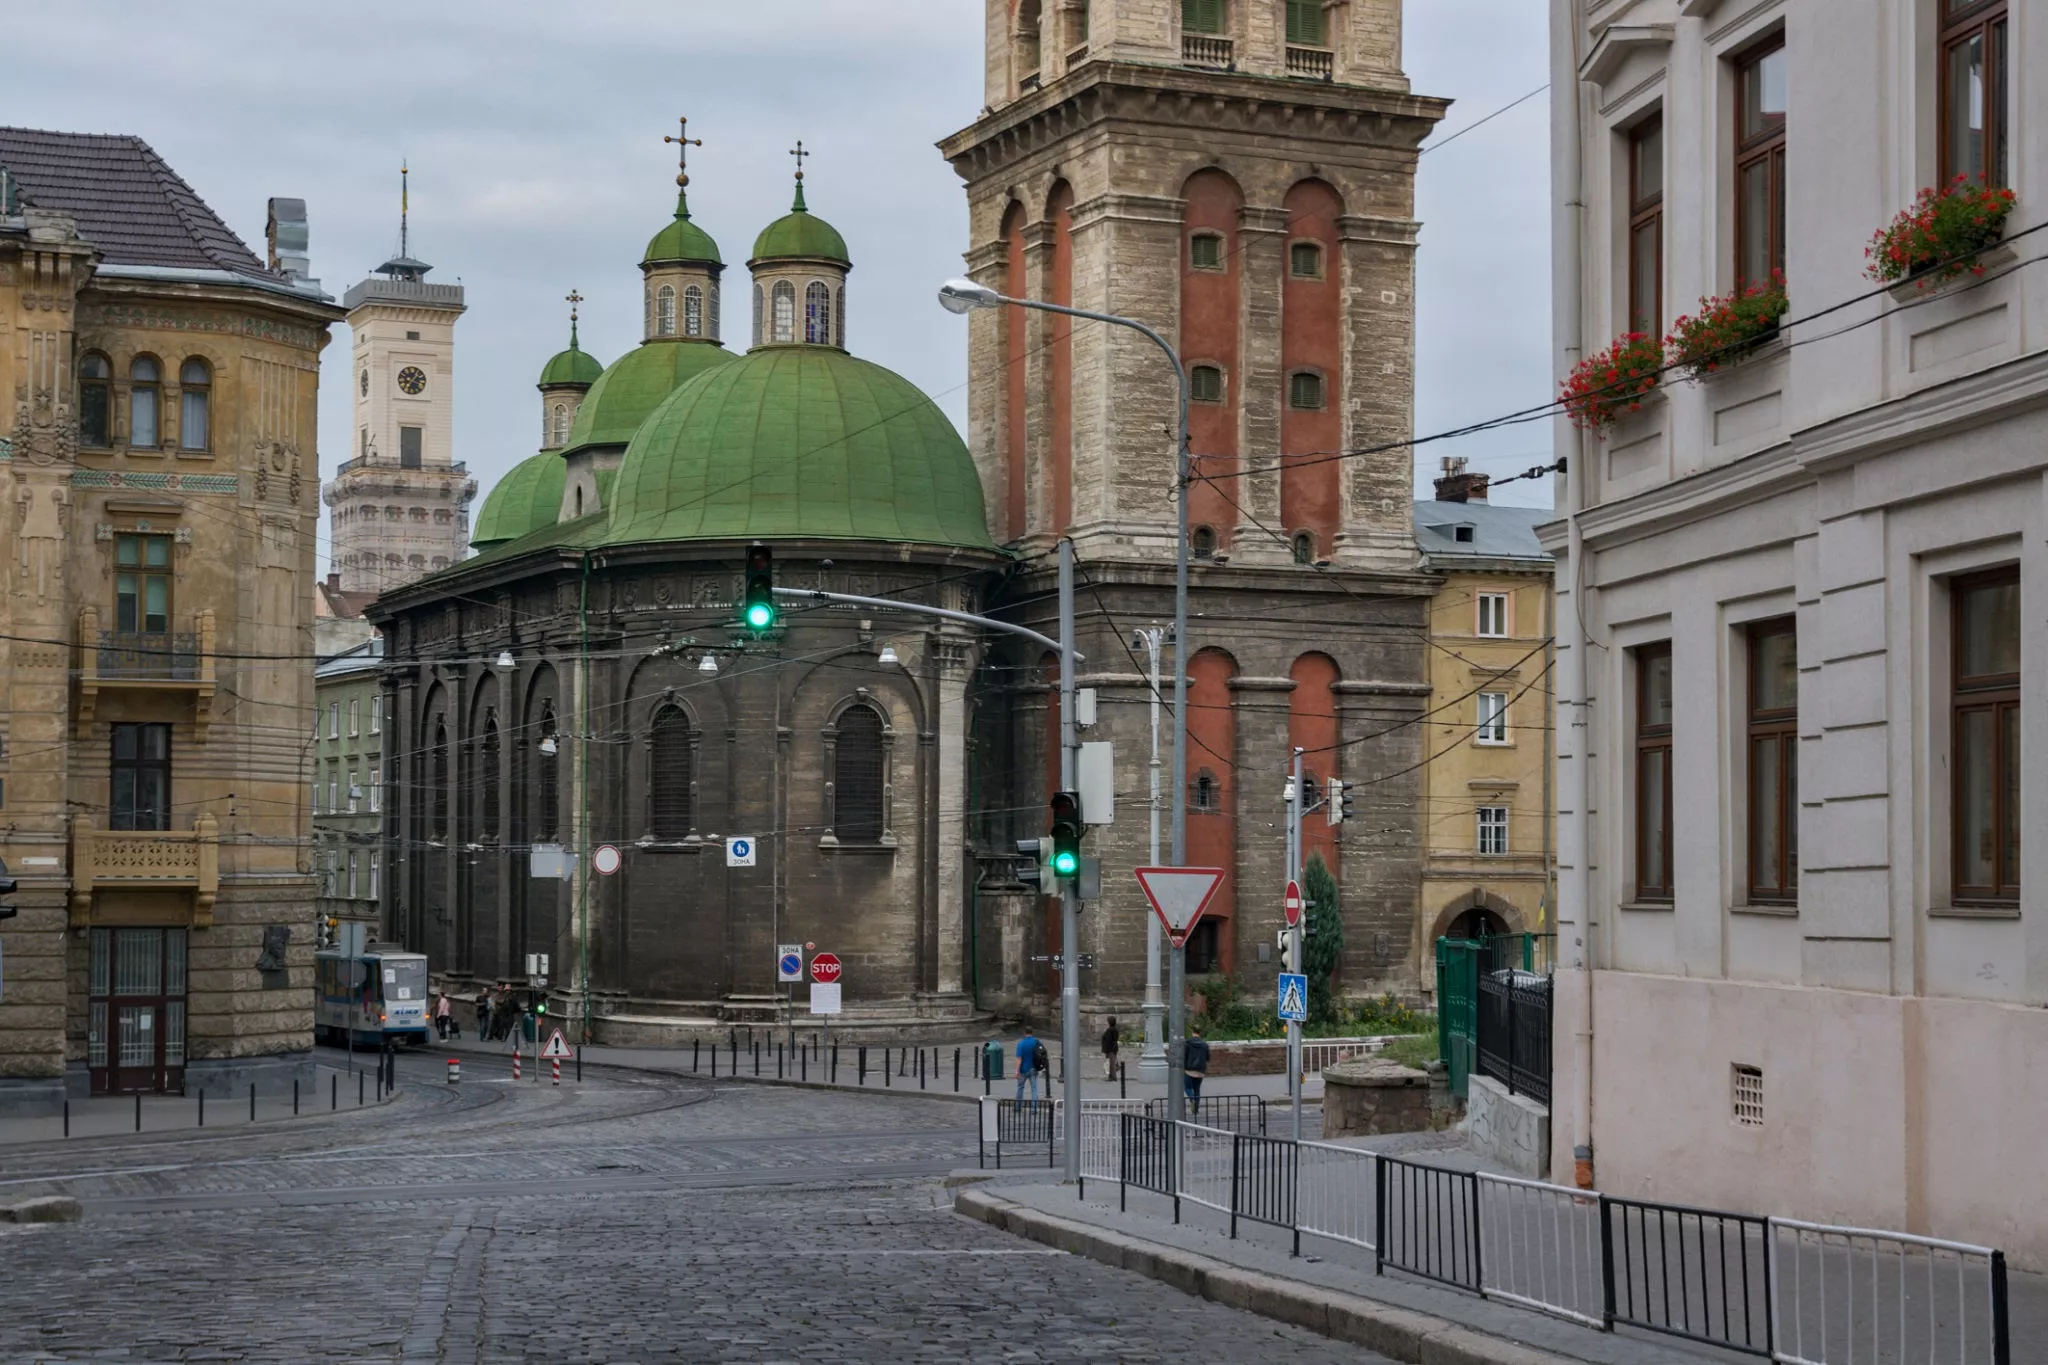 Assumption Church in Ukraine, Europe | Architecture - Rated 3.9